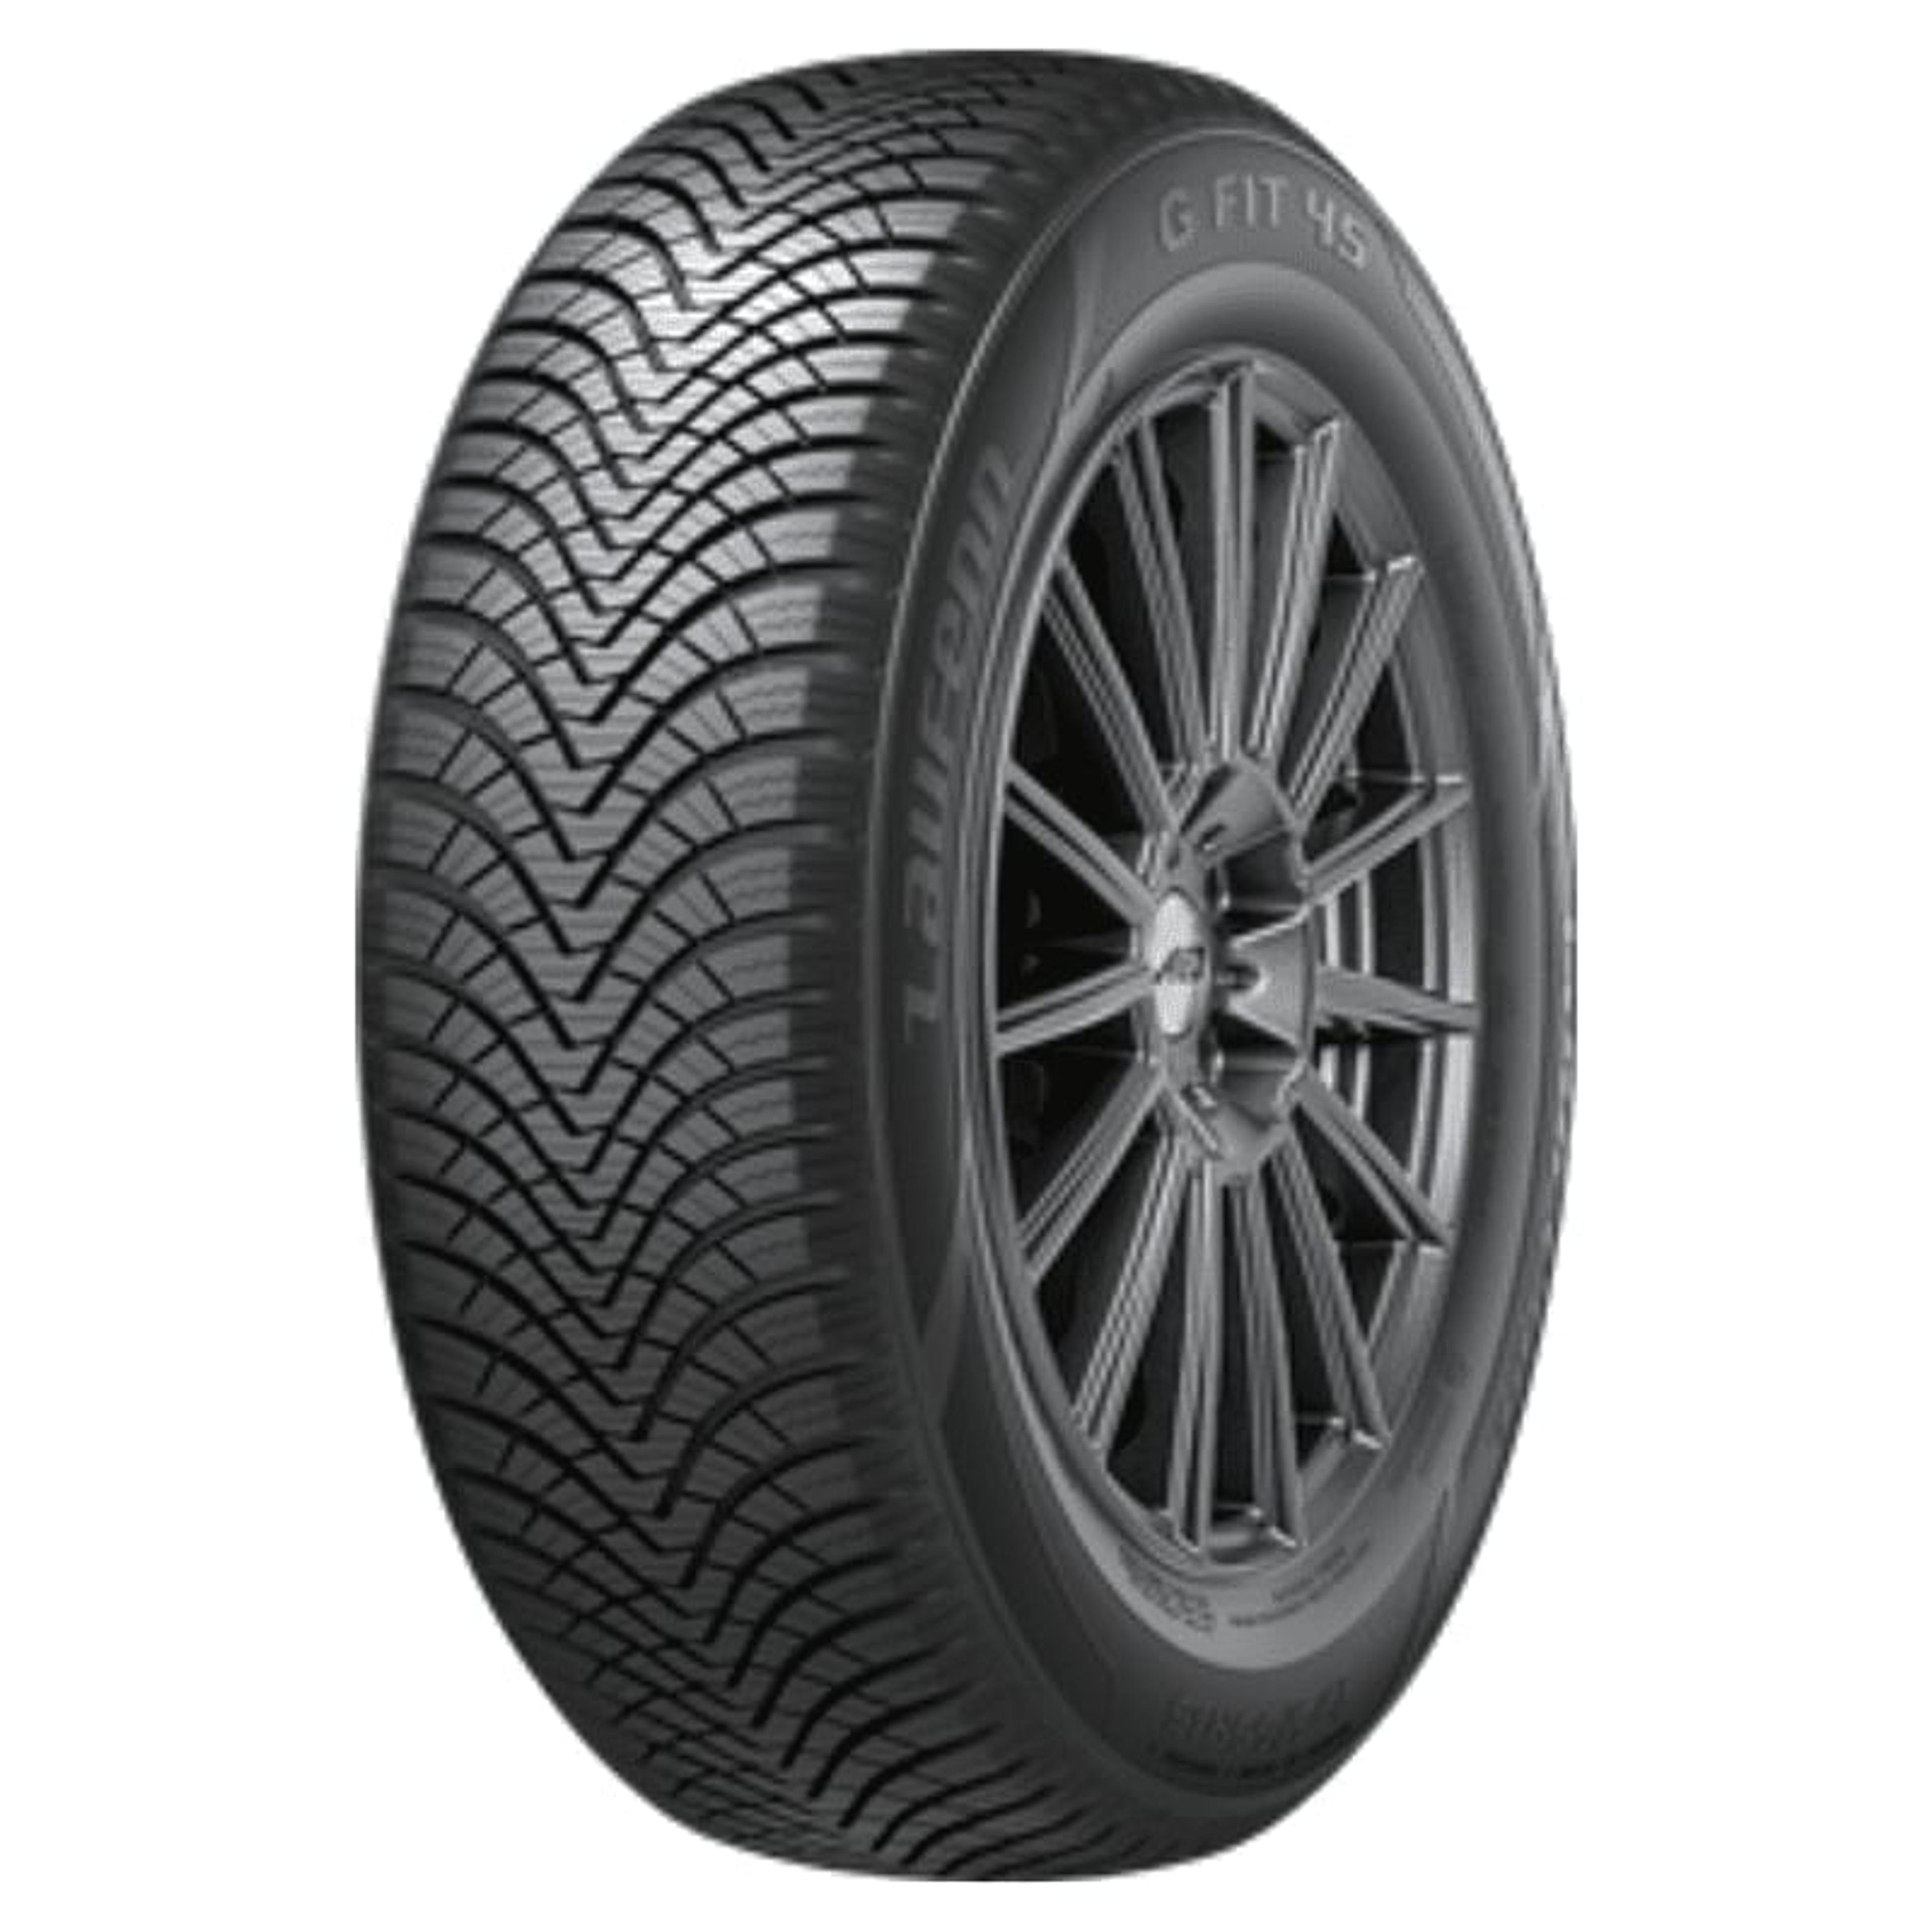 Buy Laufenn G FIT 4S Tires Online | SimpleTire